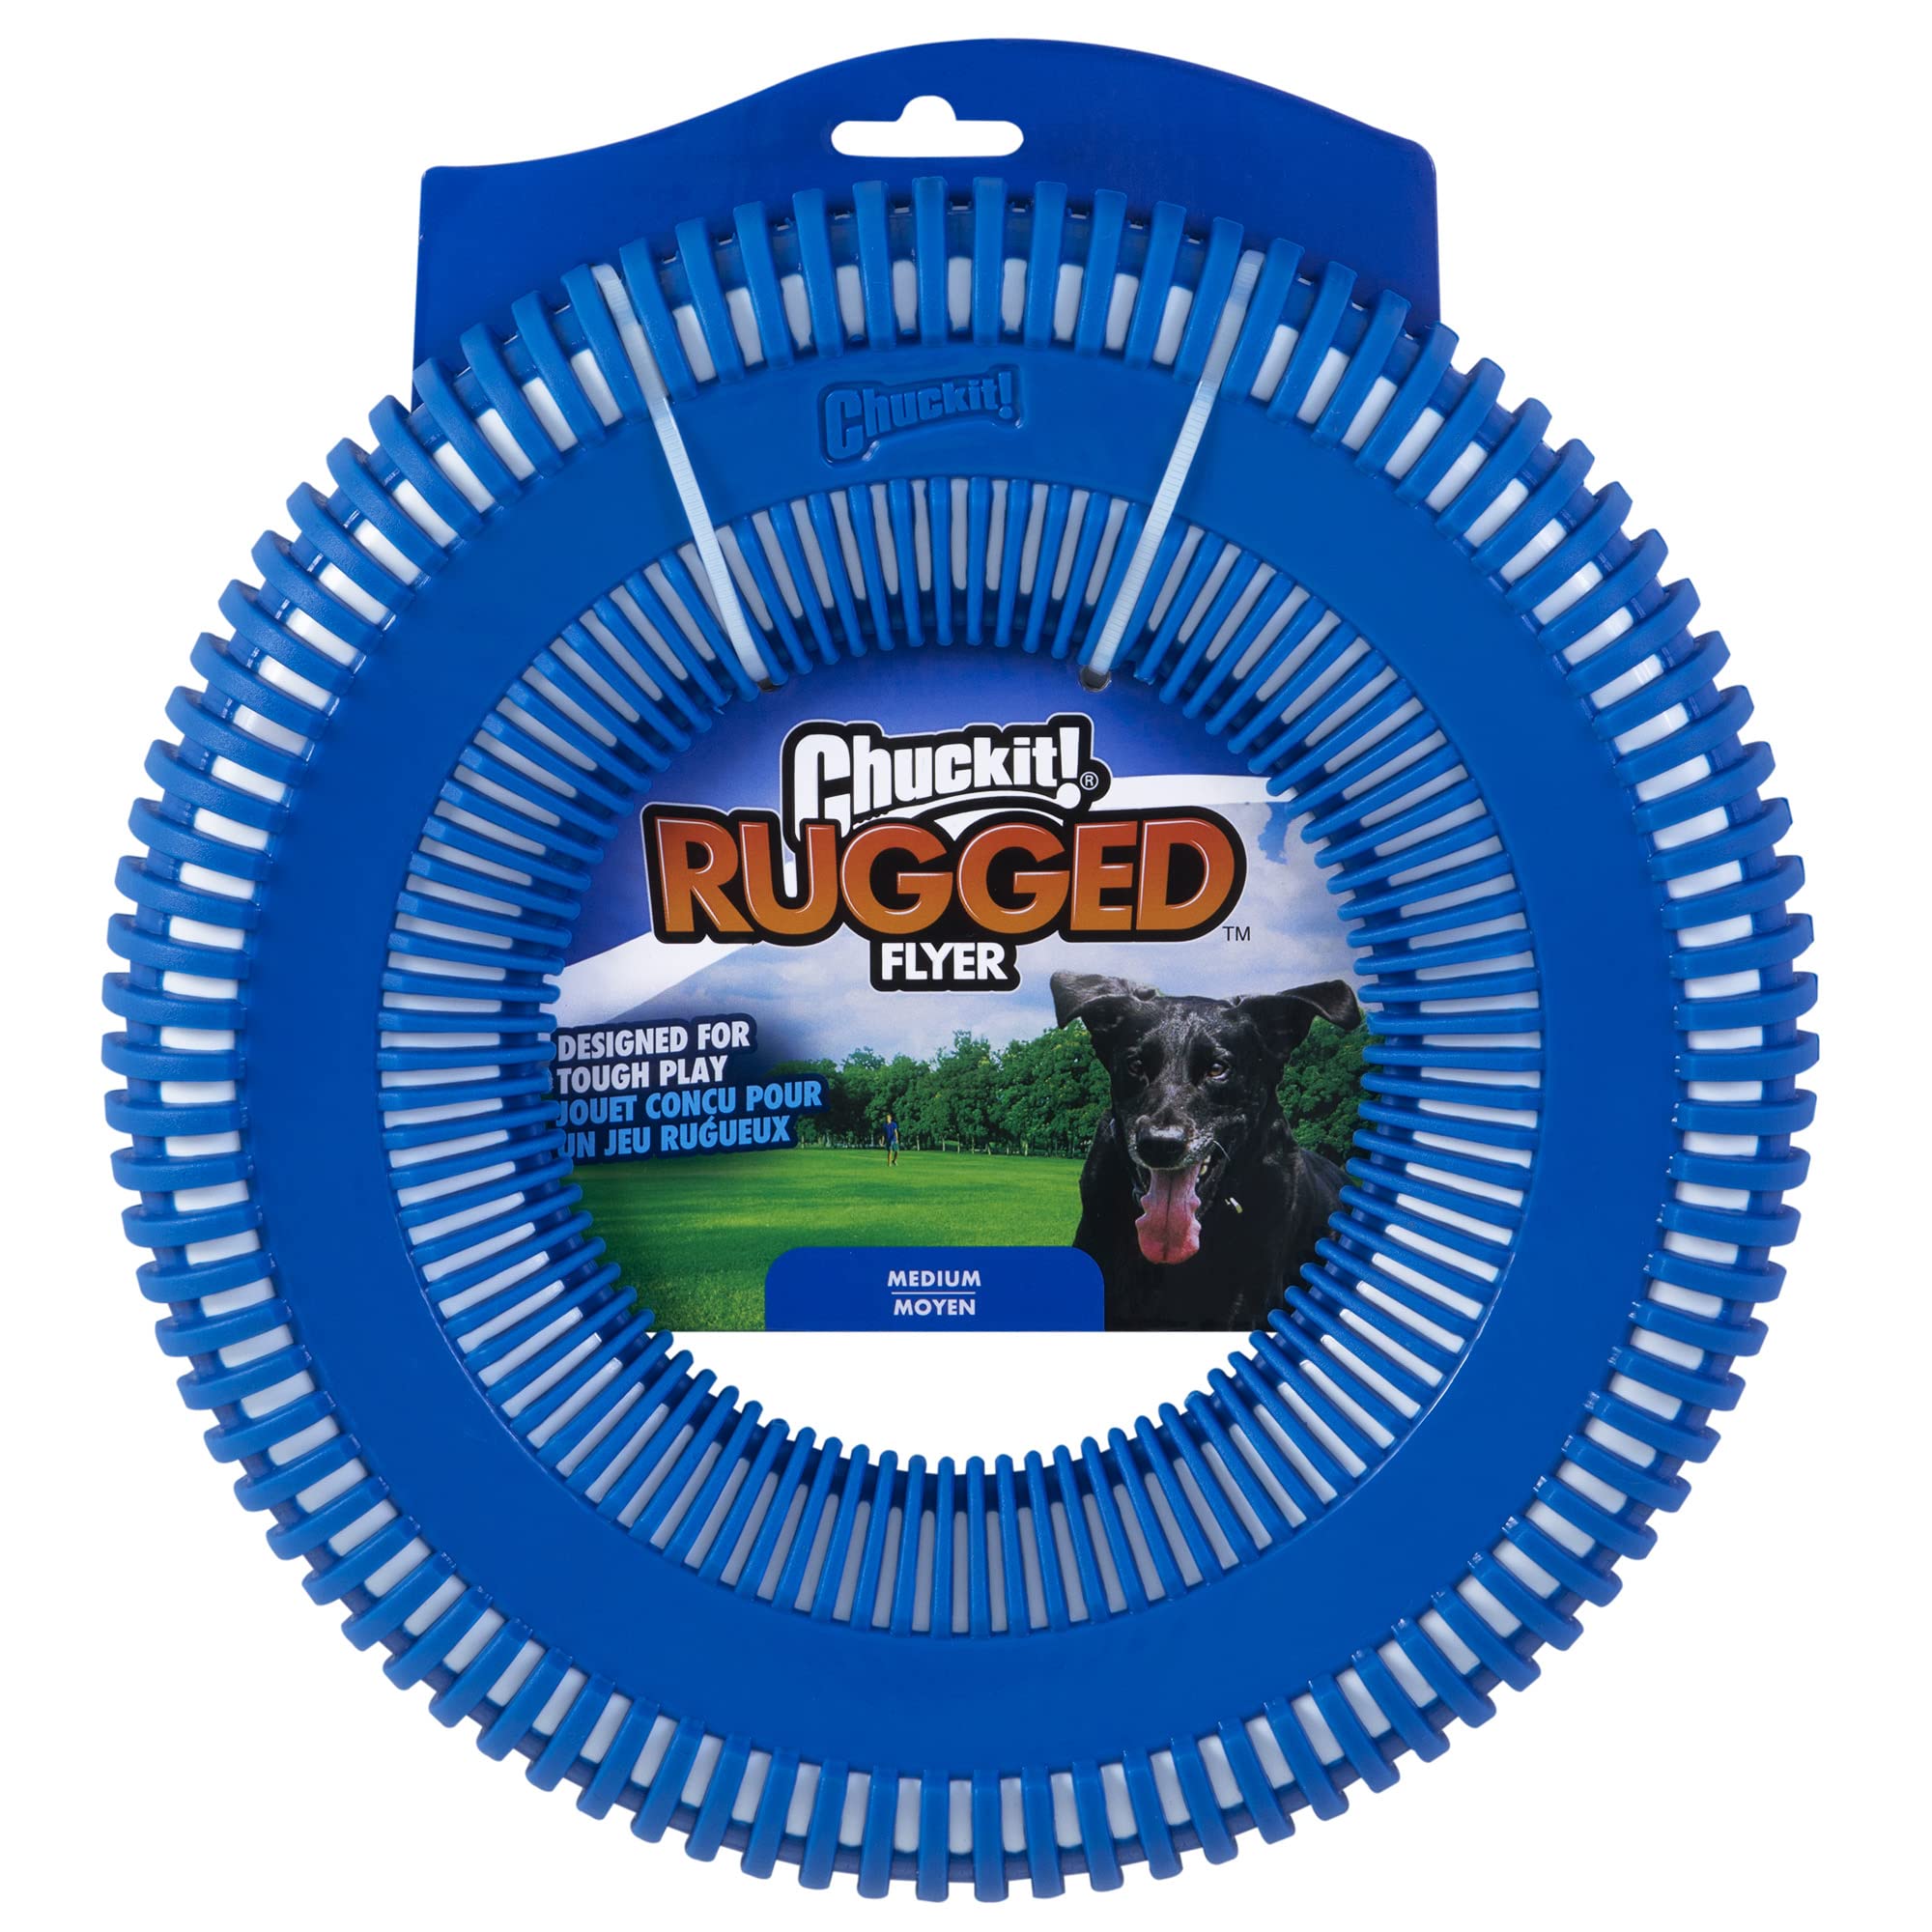 Chuckit! Rugged Flyer Dog Toy (Medium) $5.88 - Amazon or Chewy